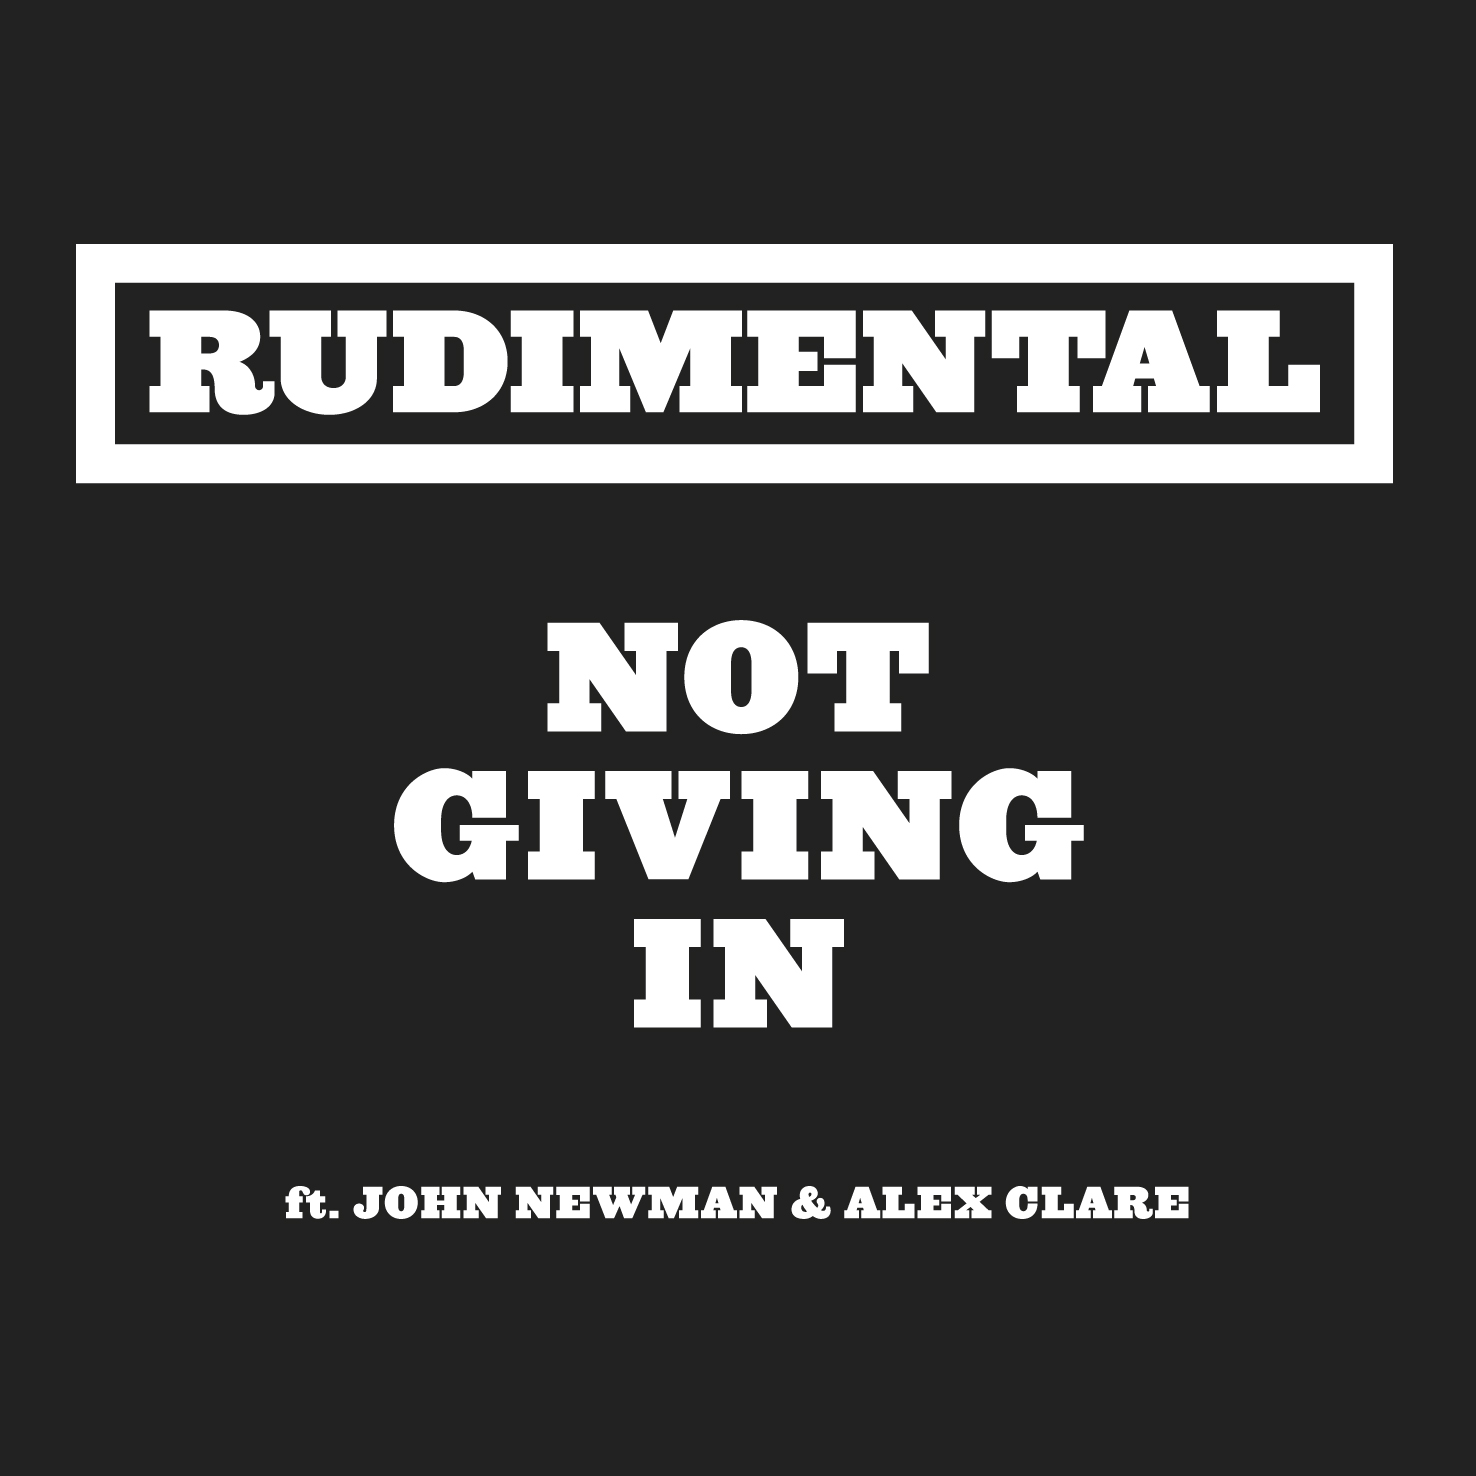 VIDEO: Rudimental feat John Newman & Alex Clare - Not Giving In